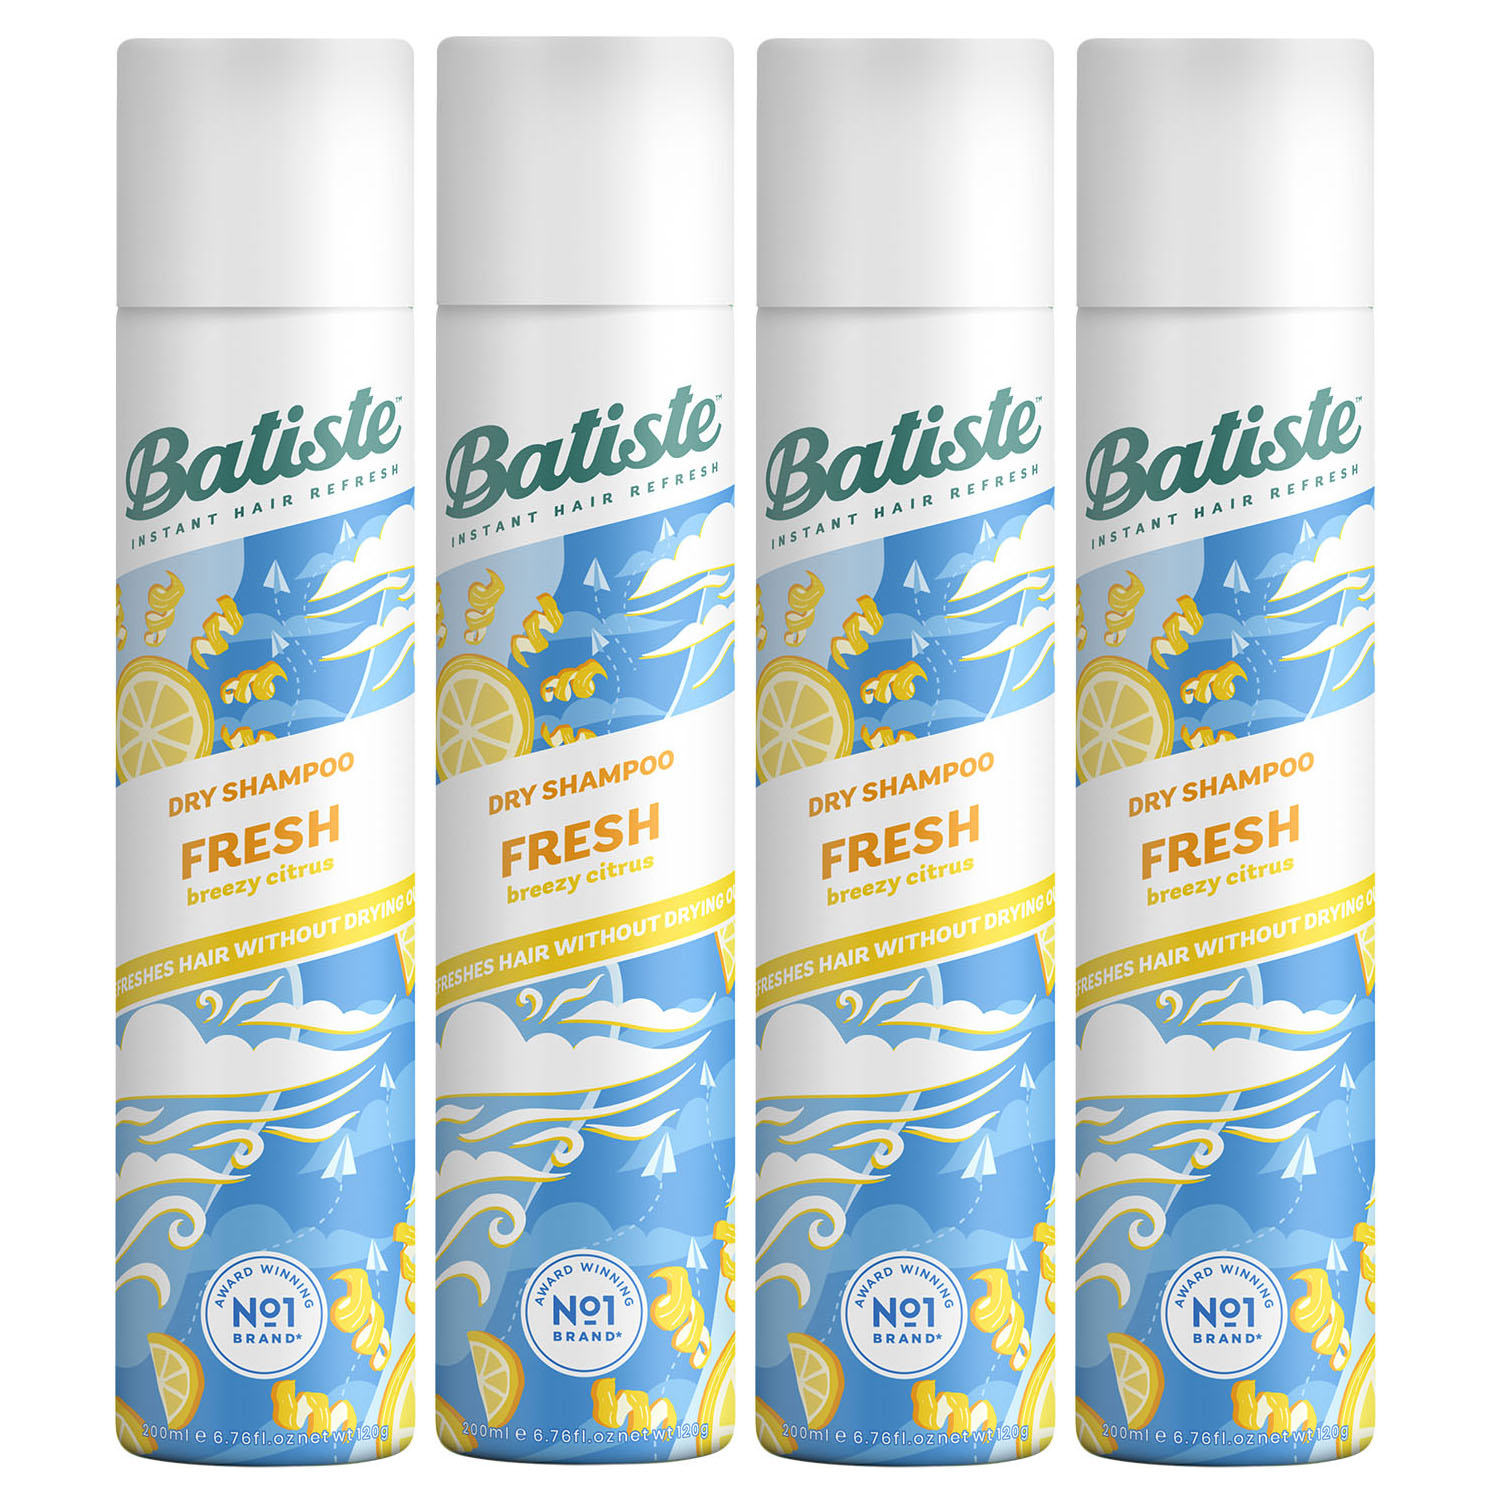 Batiste Сухой шампунь для волос Fresh с ароматом свежести, 4 х 200 мл (Batiste, Fragrance)